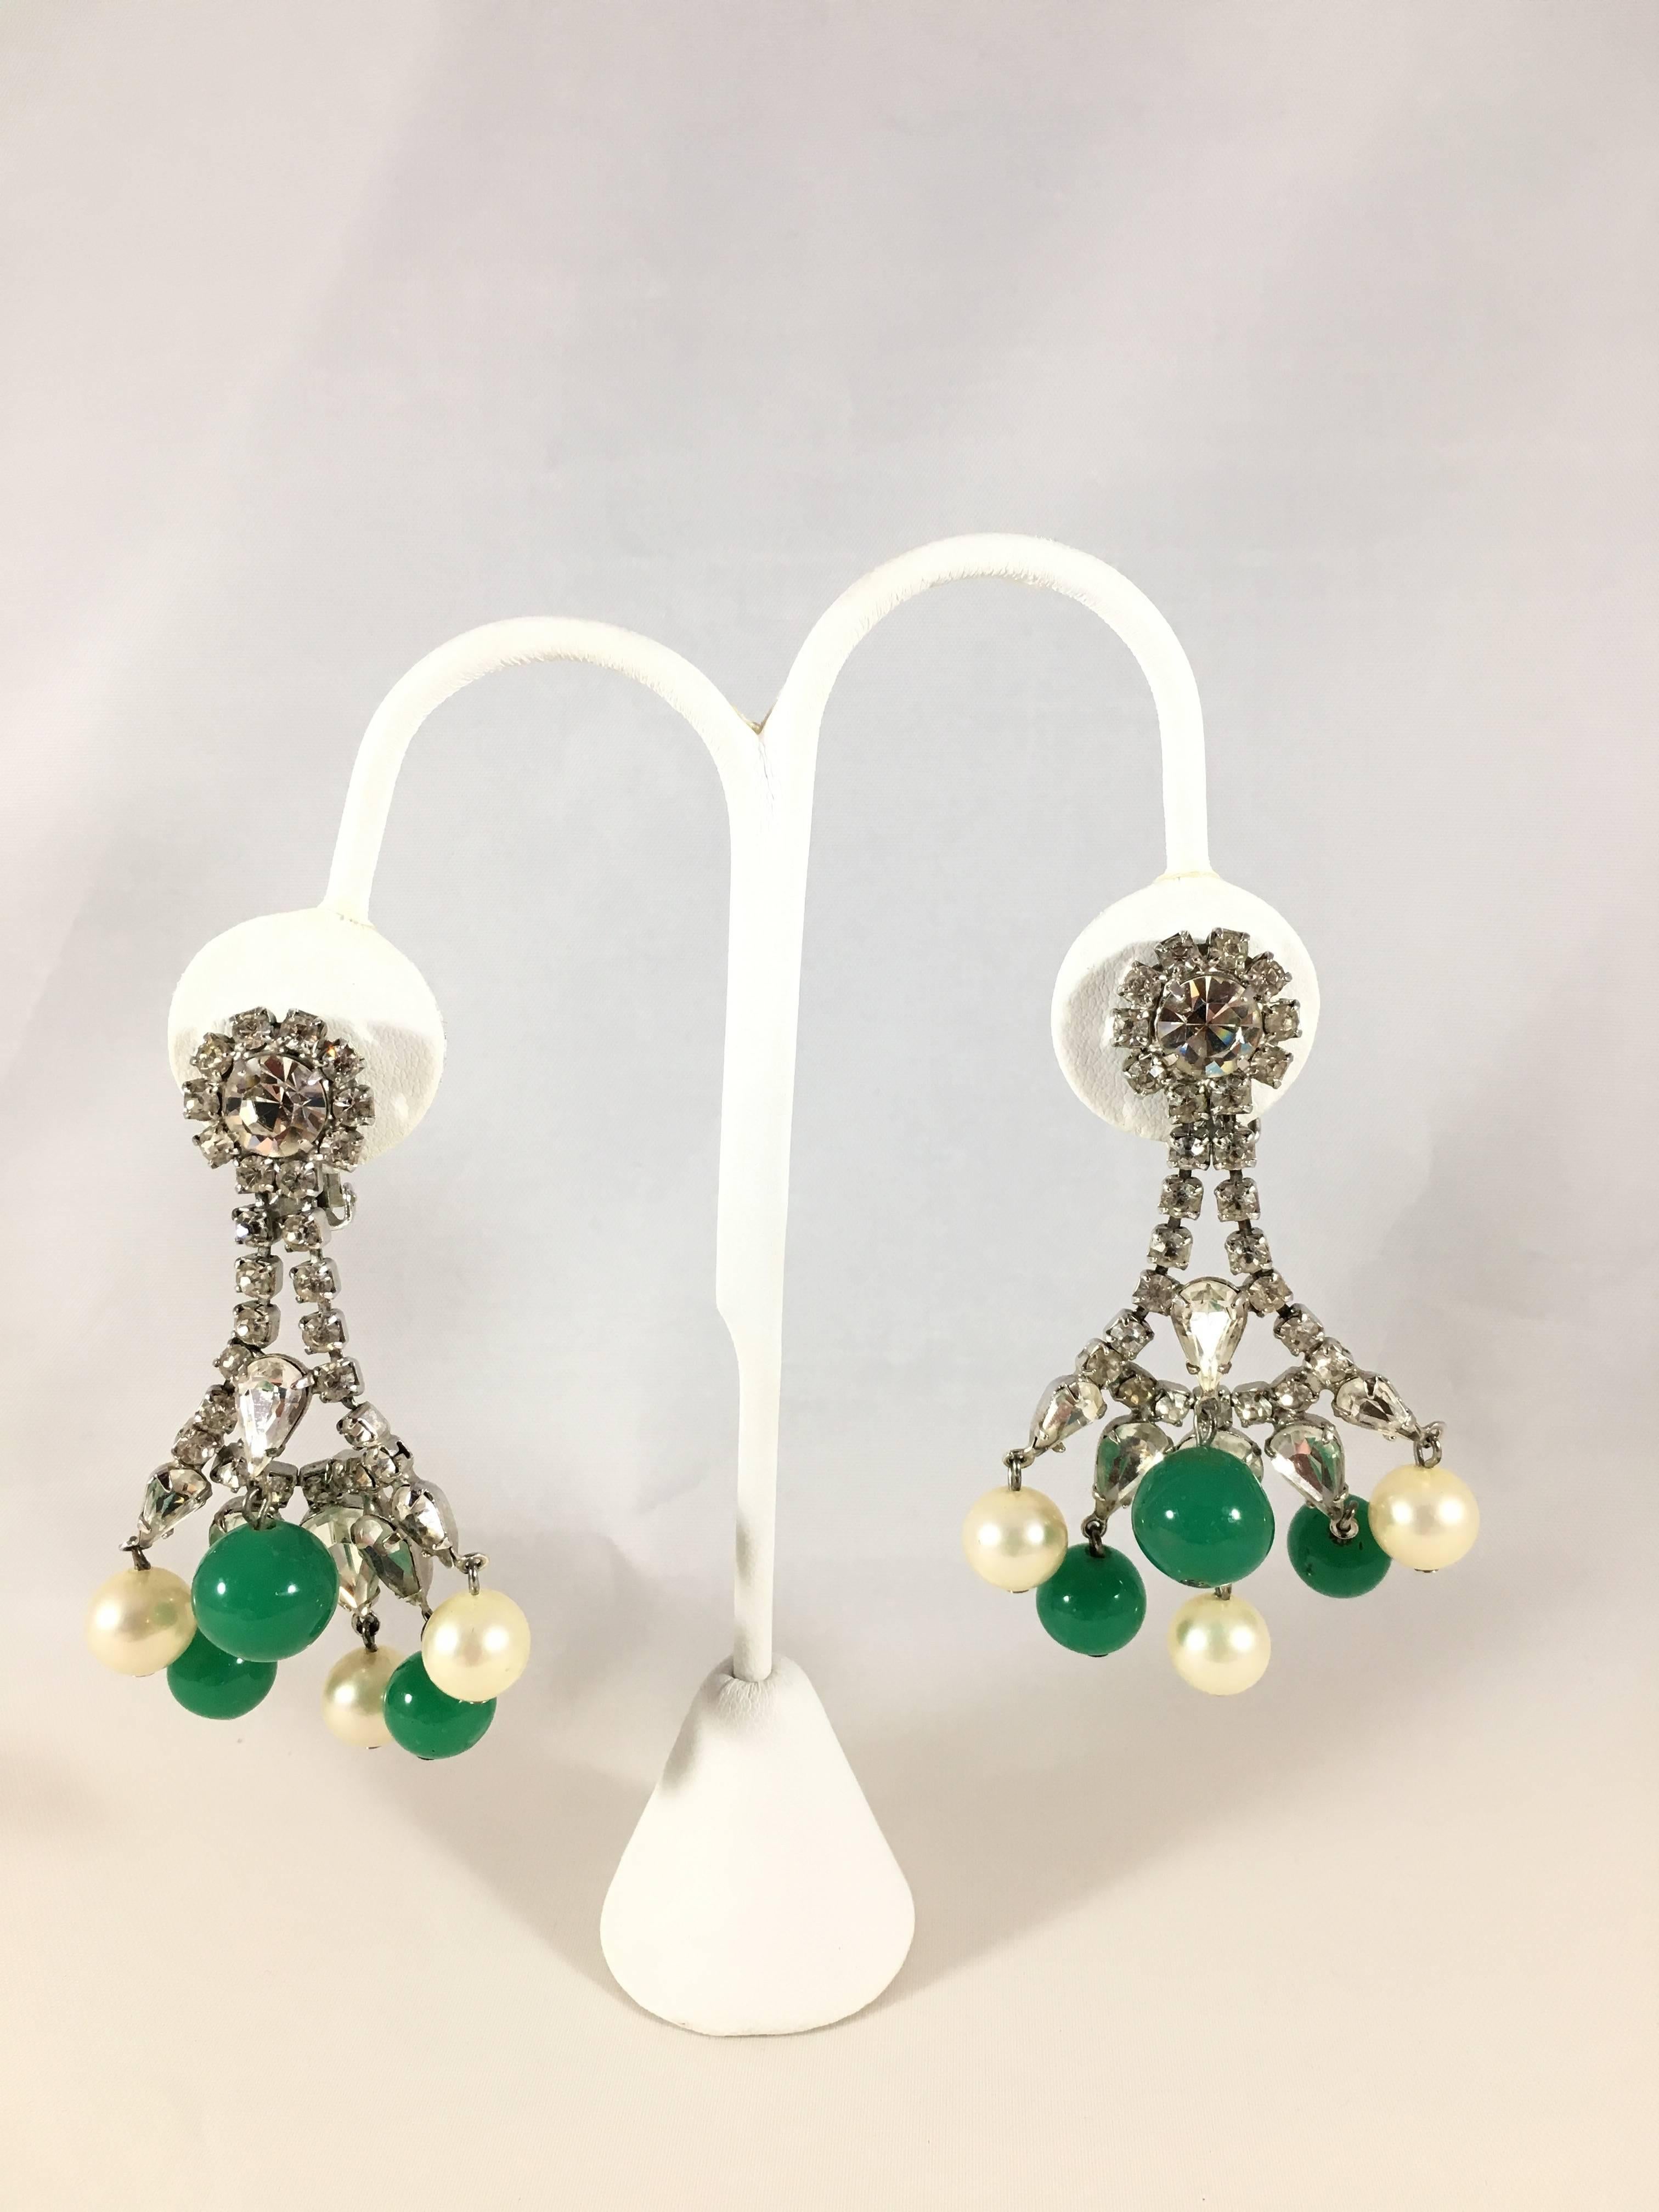 Hattie Carnegie 60s Chandelier Earrings with Rhinestones, Pearls and Emeralds For Sale 1